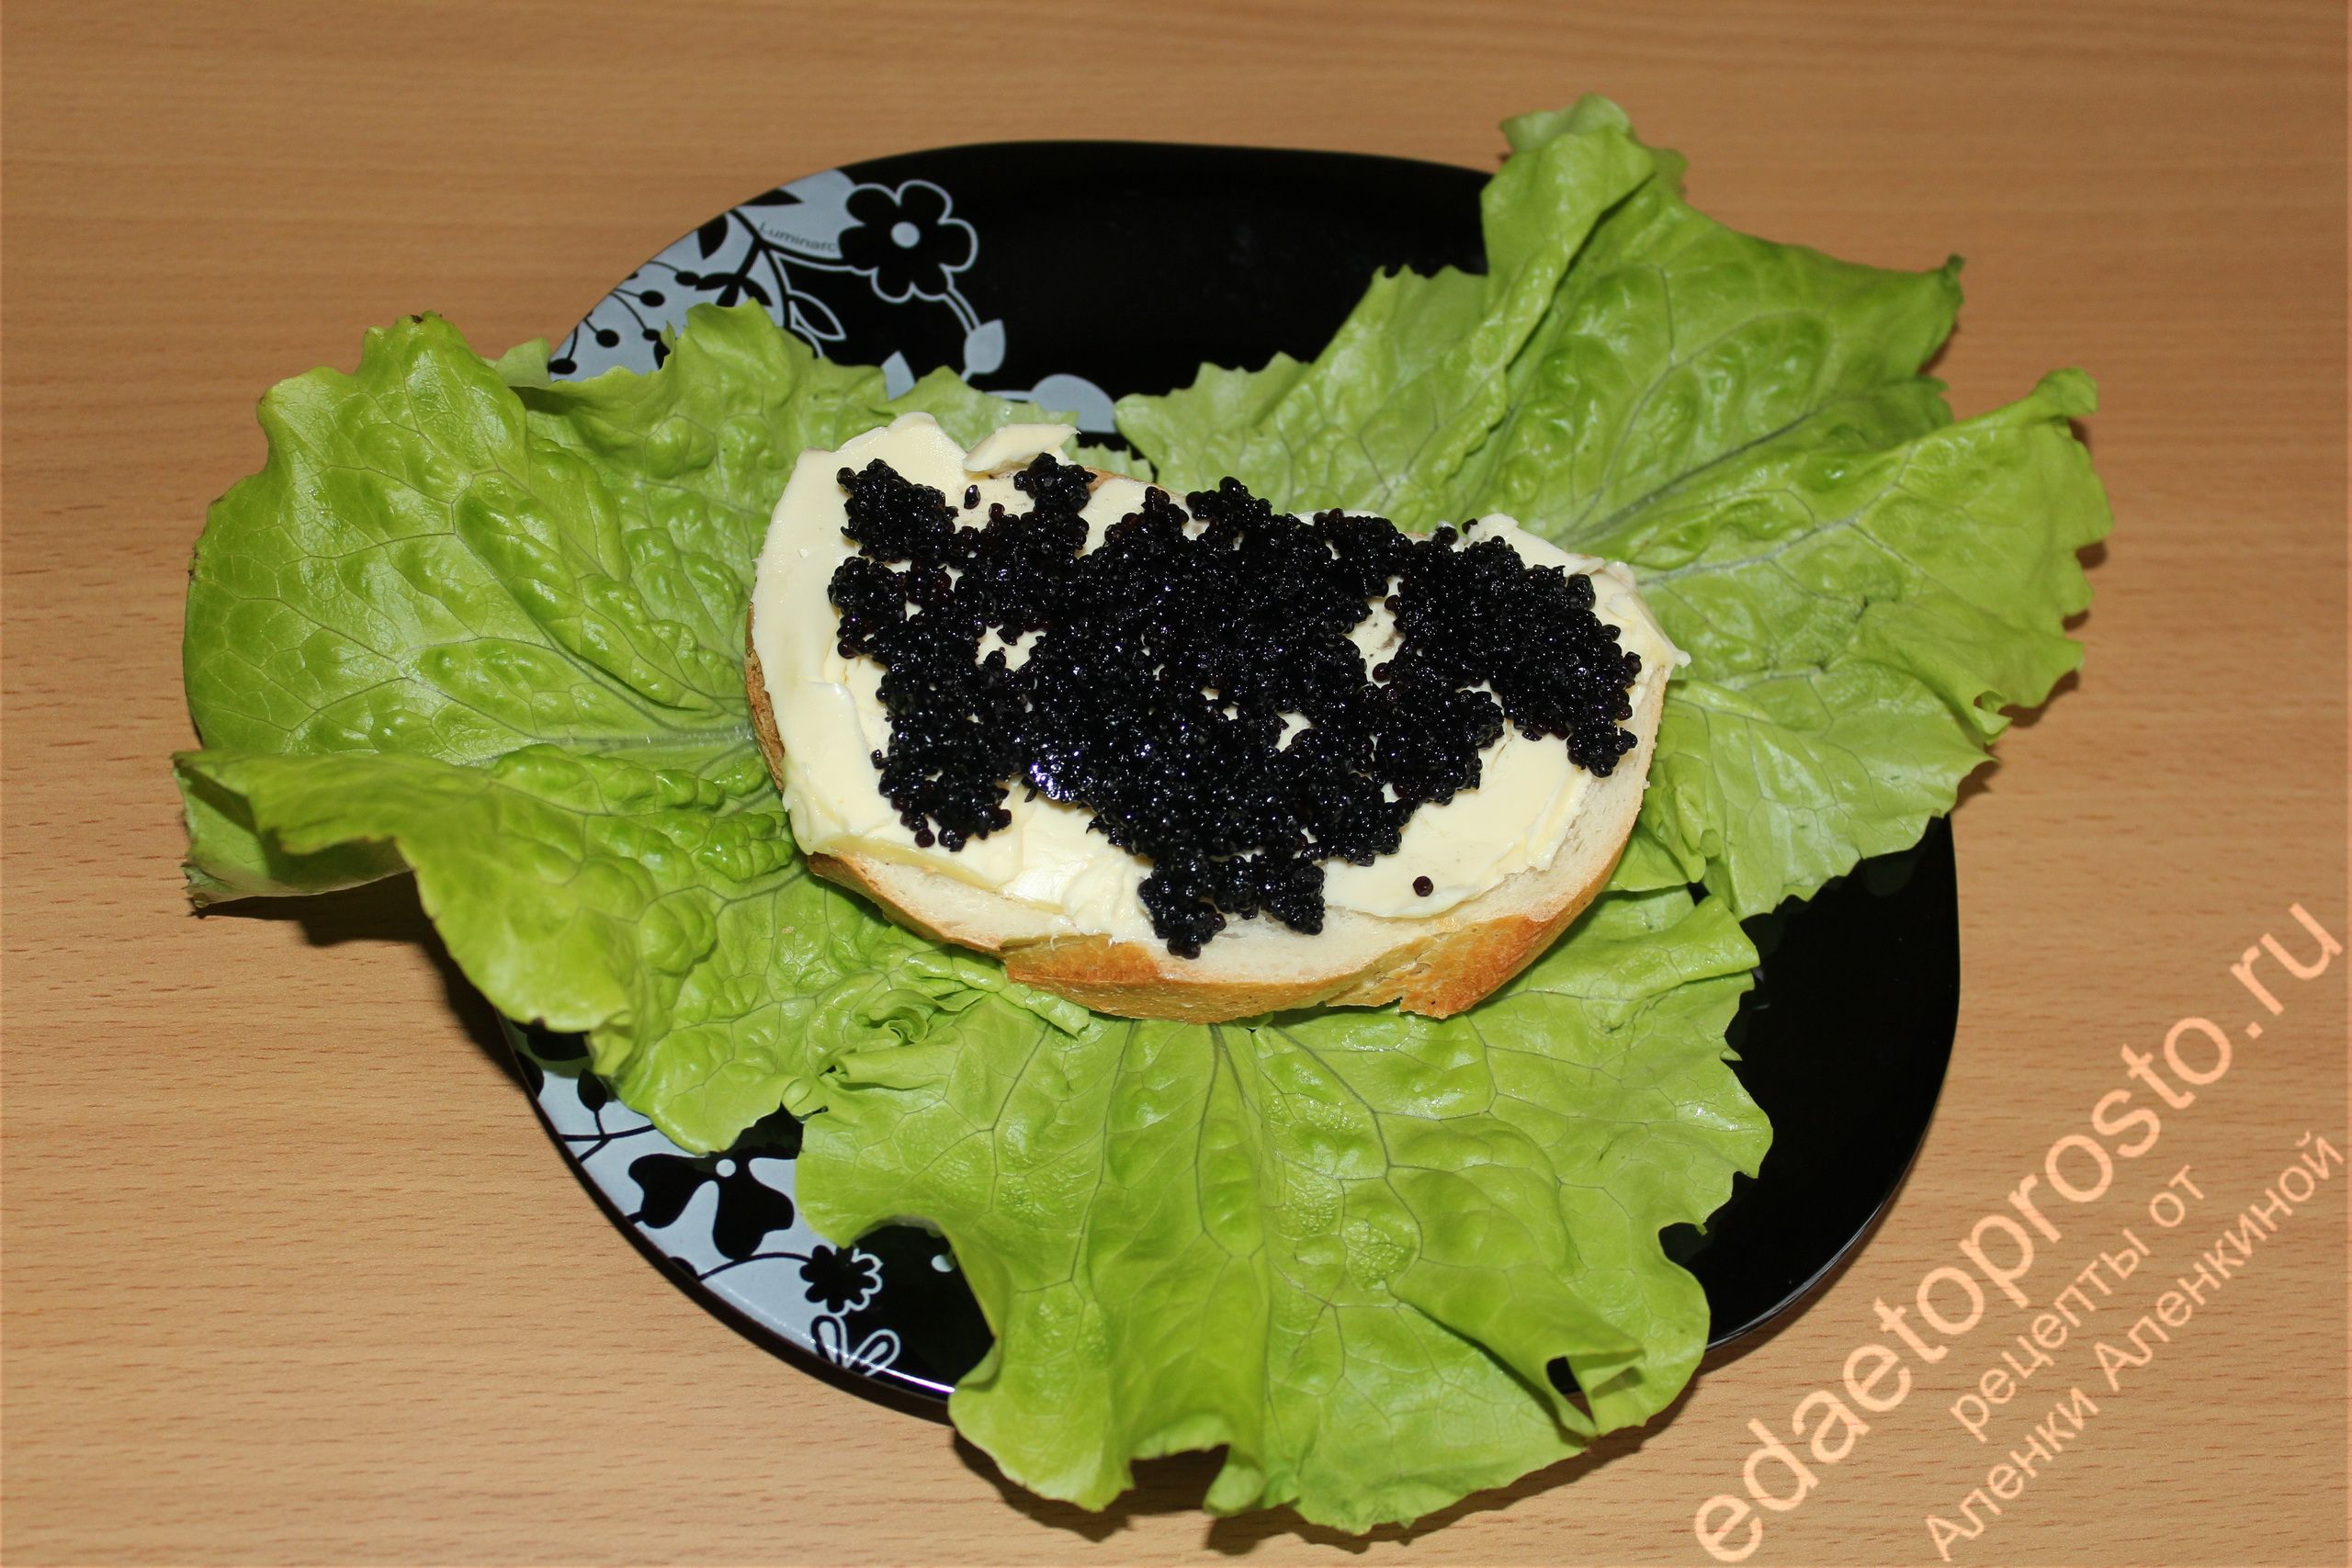 на фото бутерброд с черной икрой на листьях салата